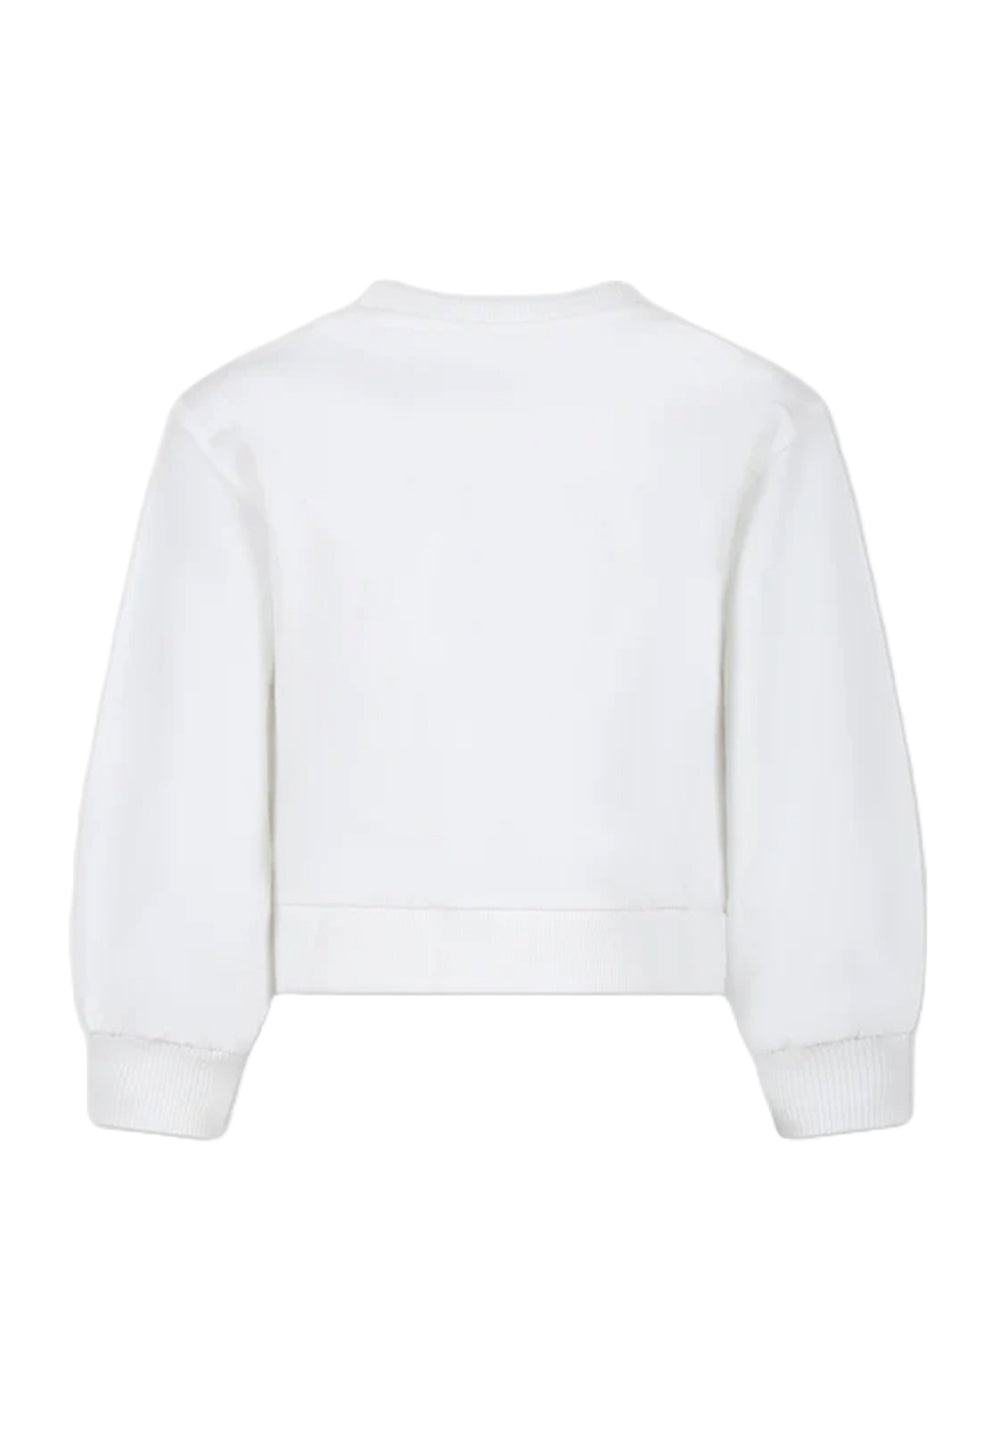 White crewneck sweatshirt for girls